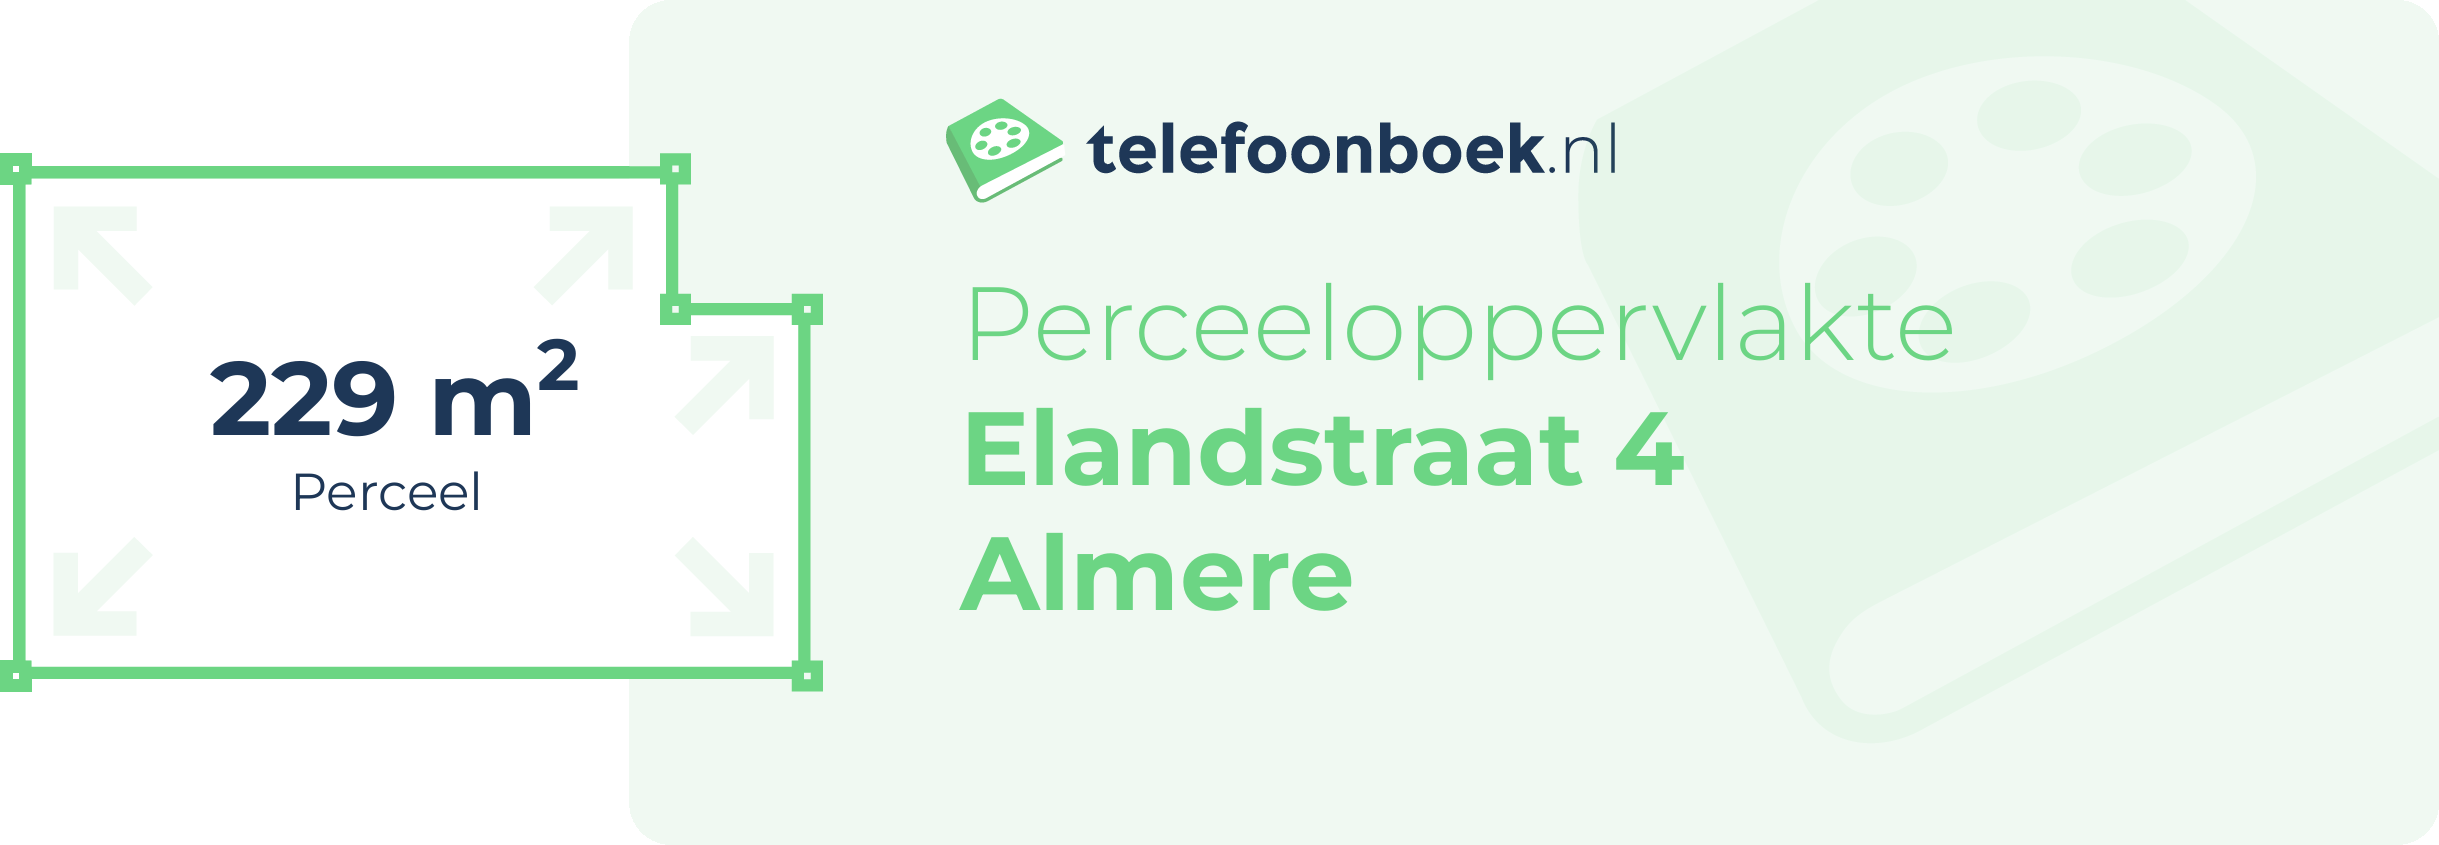 Perceeloppervlakte Elandstraat 4 Almere